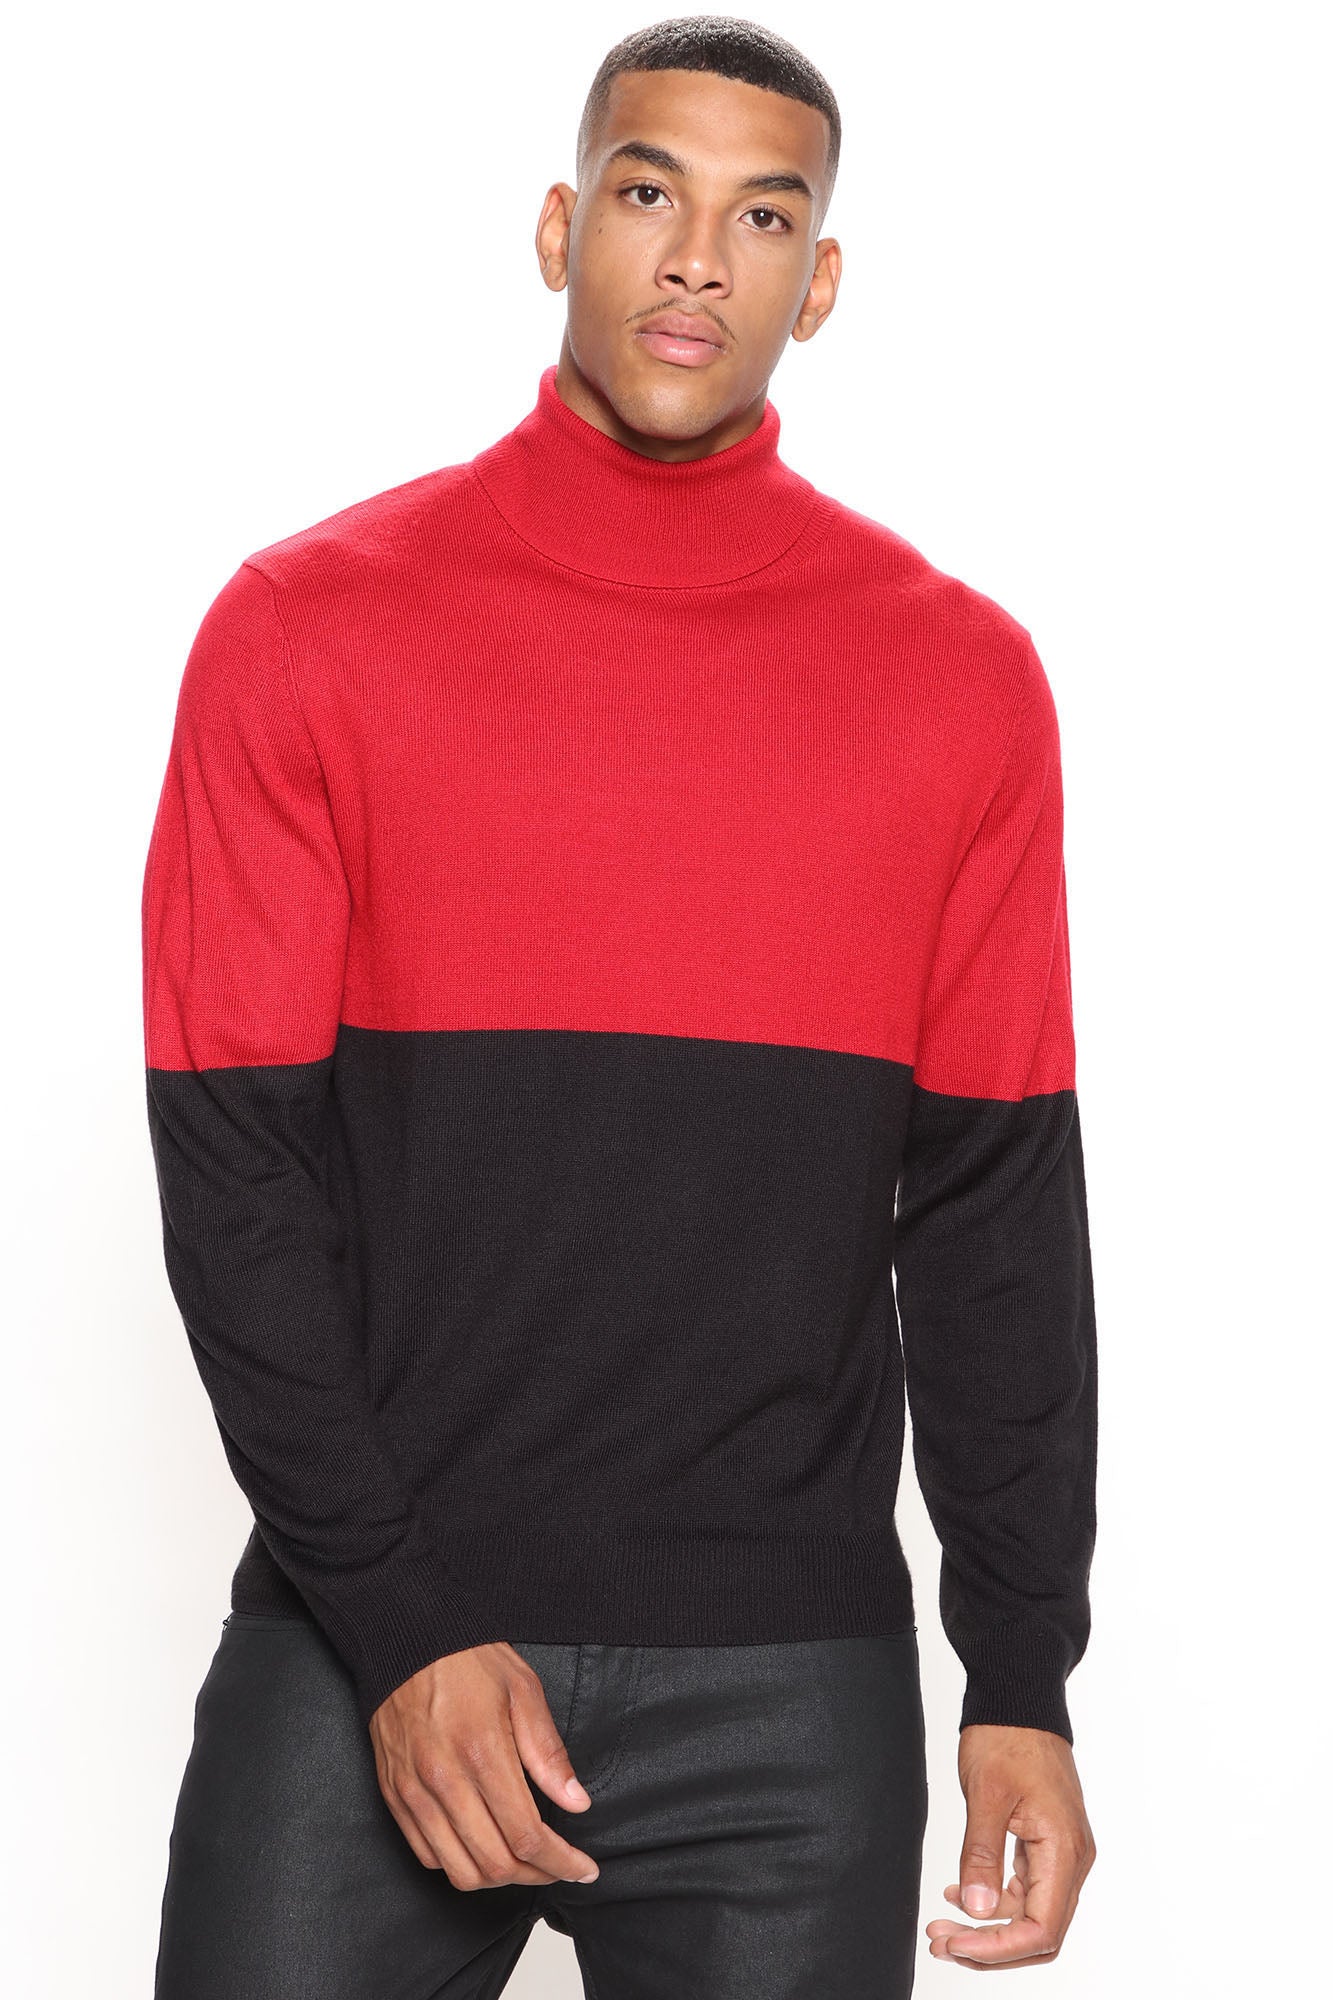 DeAngelo Turtleneck Sweater - Burgundy, Fashion Nova, Mens Sweaters